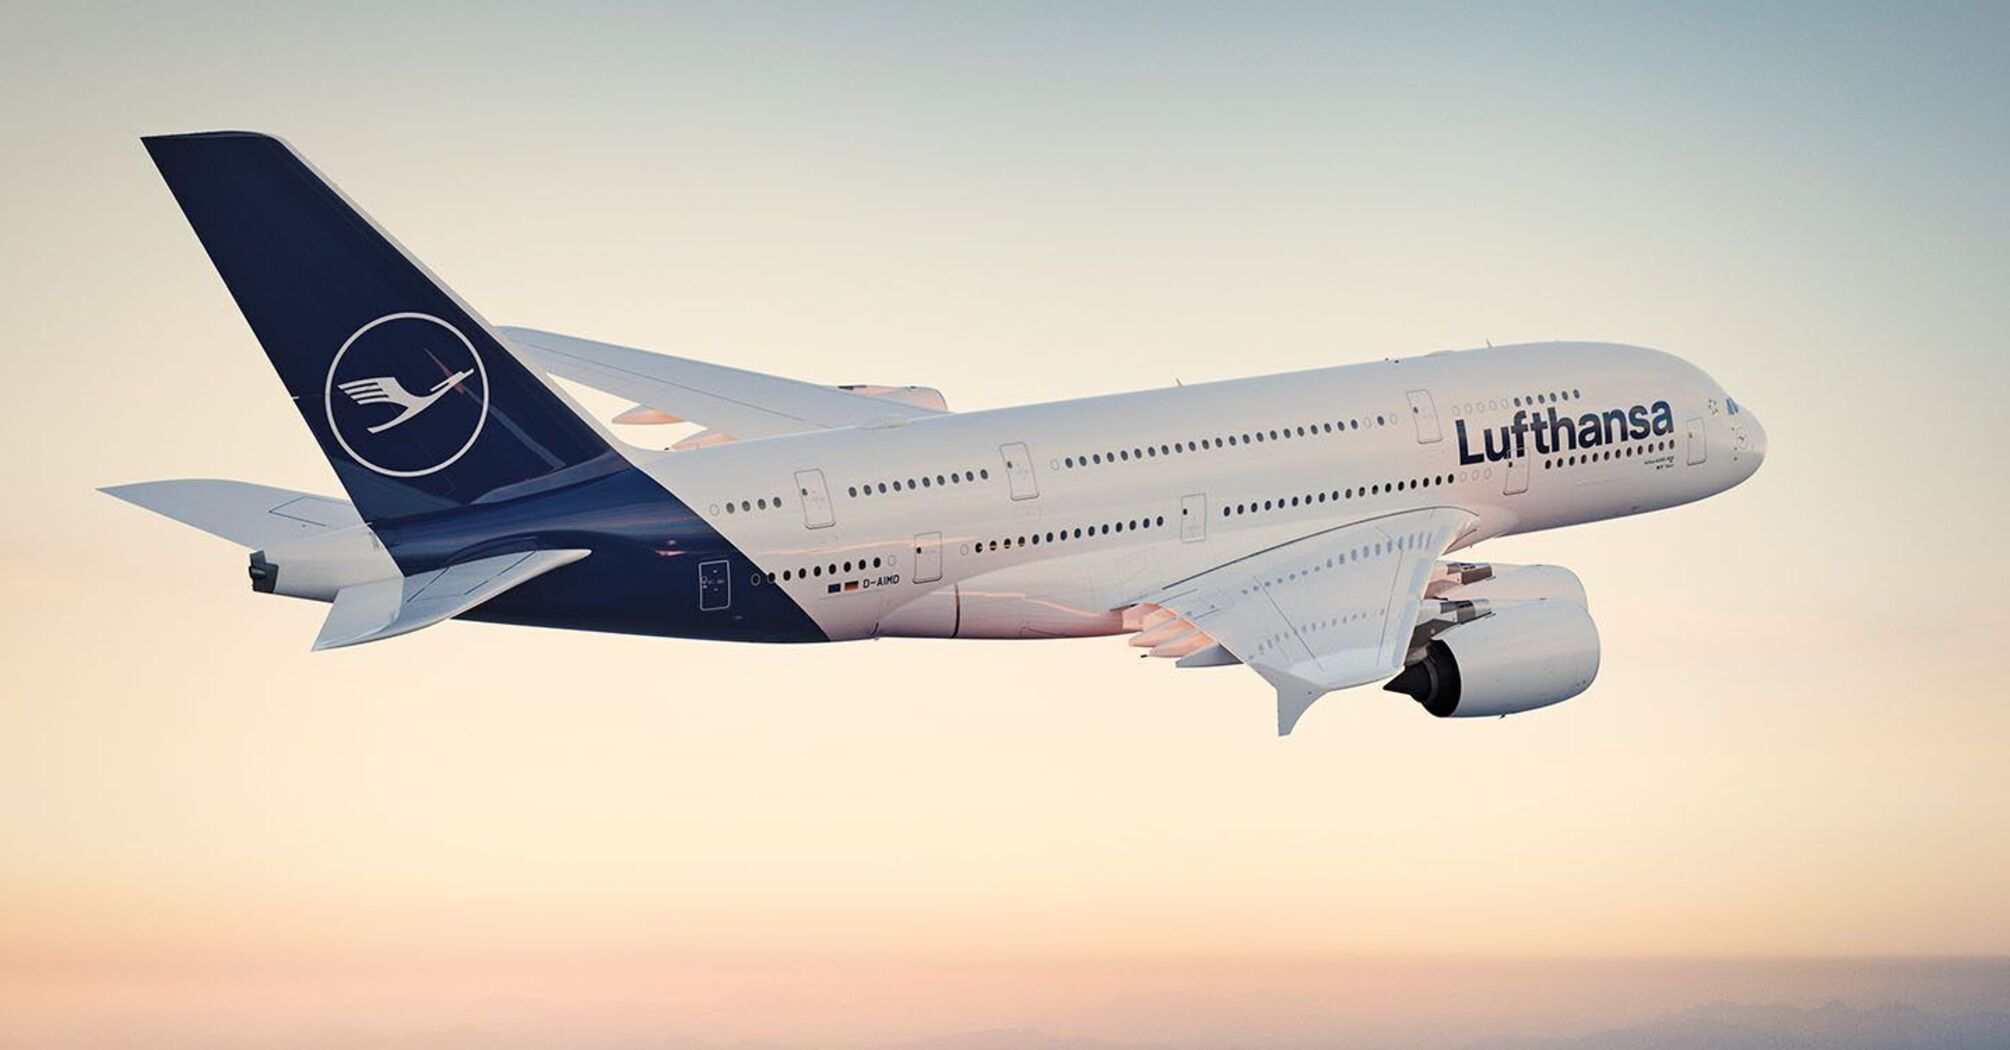 Lufthansa to modernize more than 150 aircraft